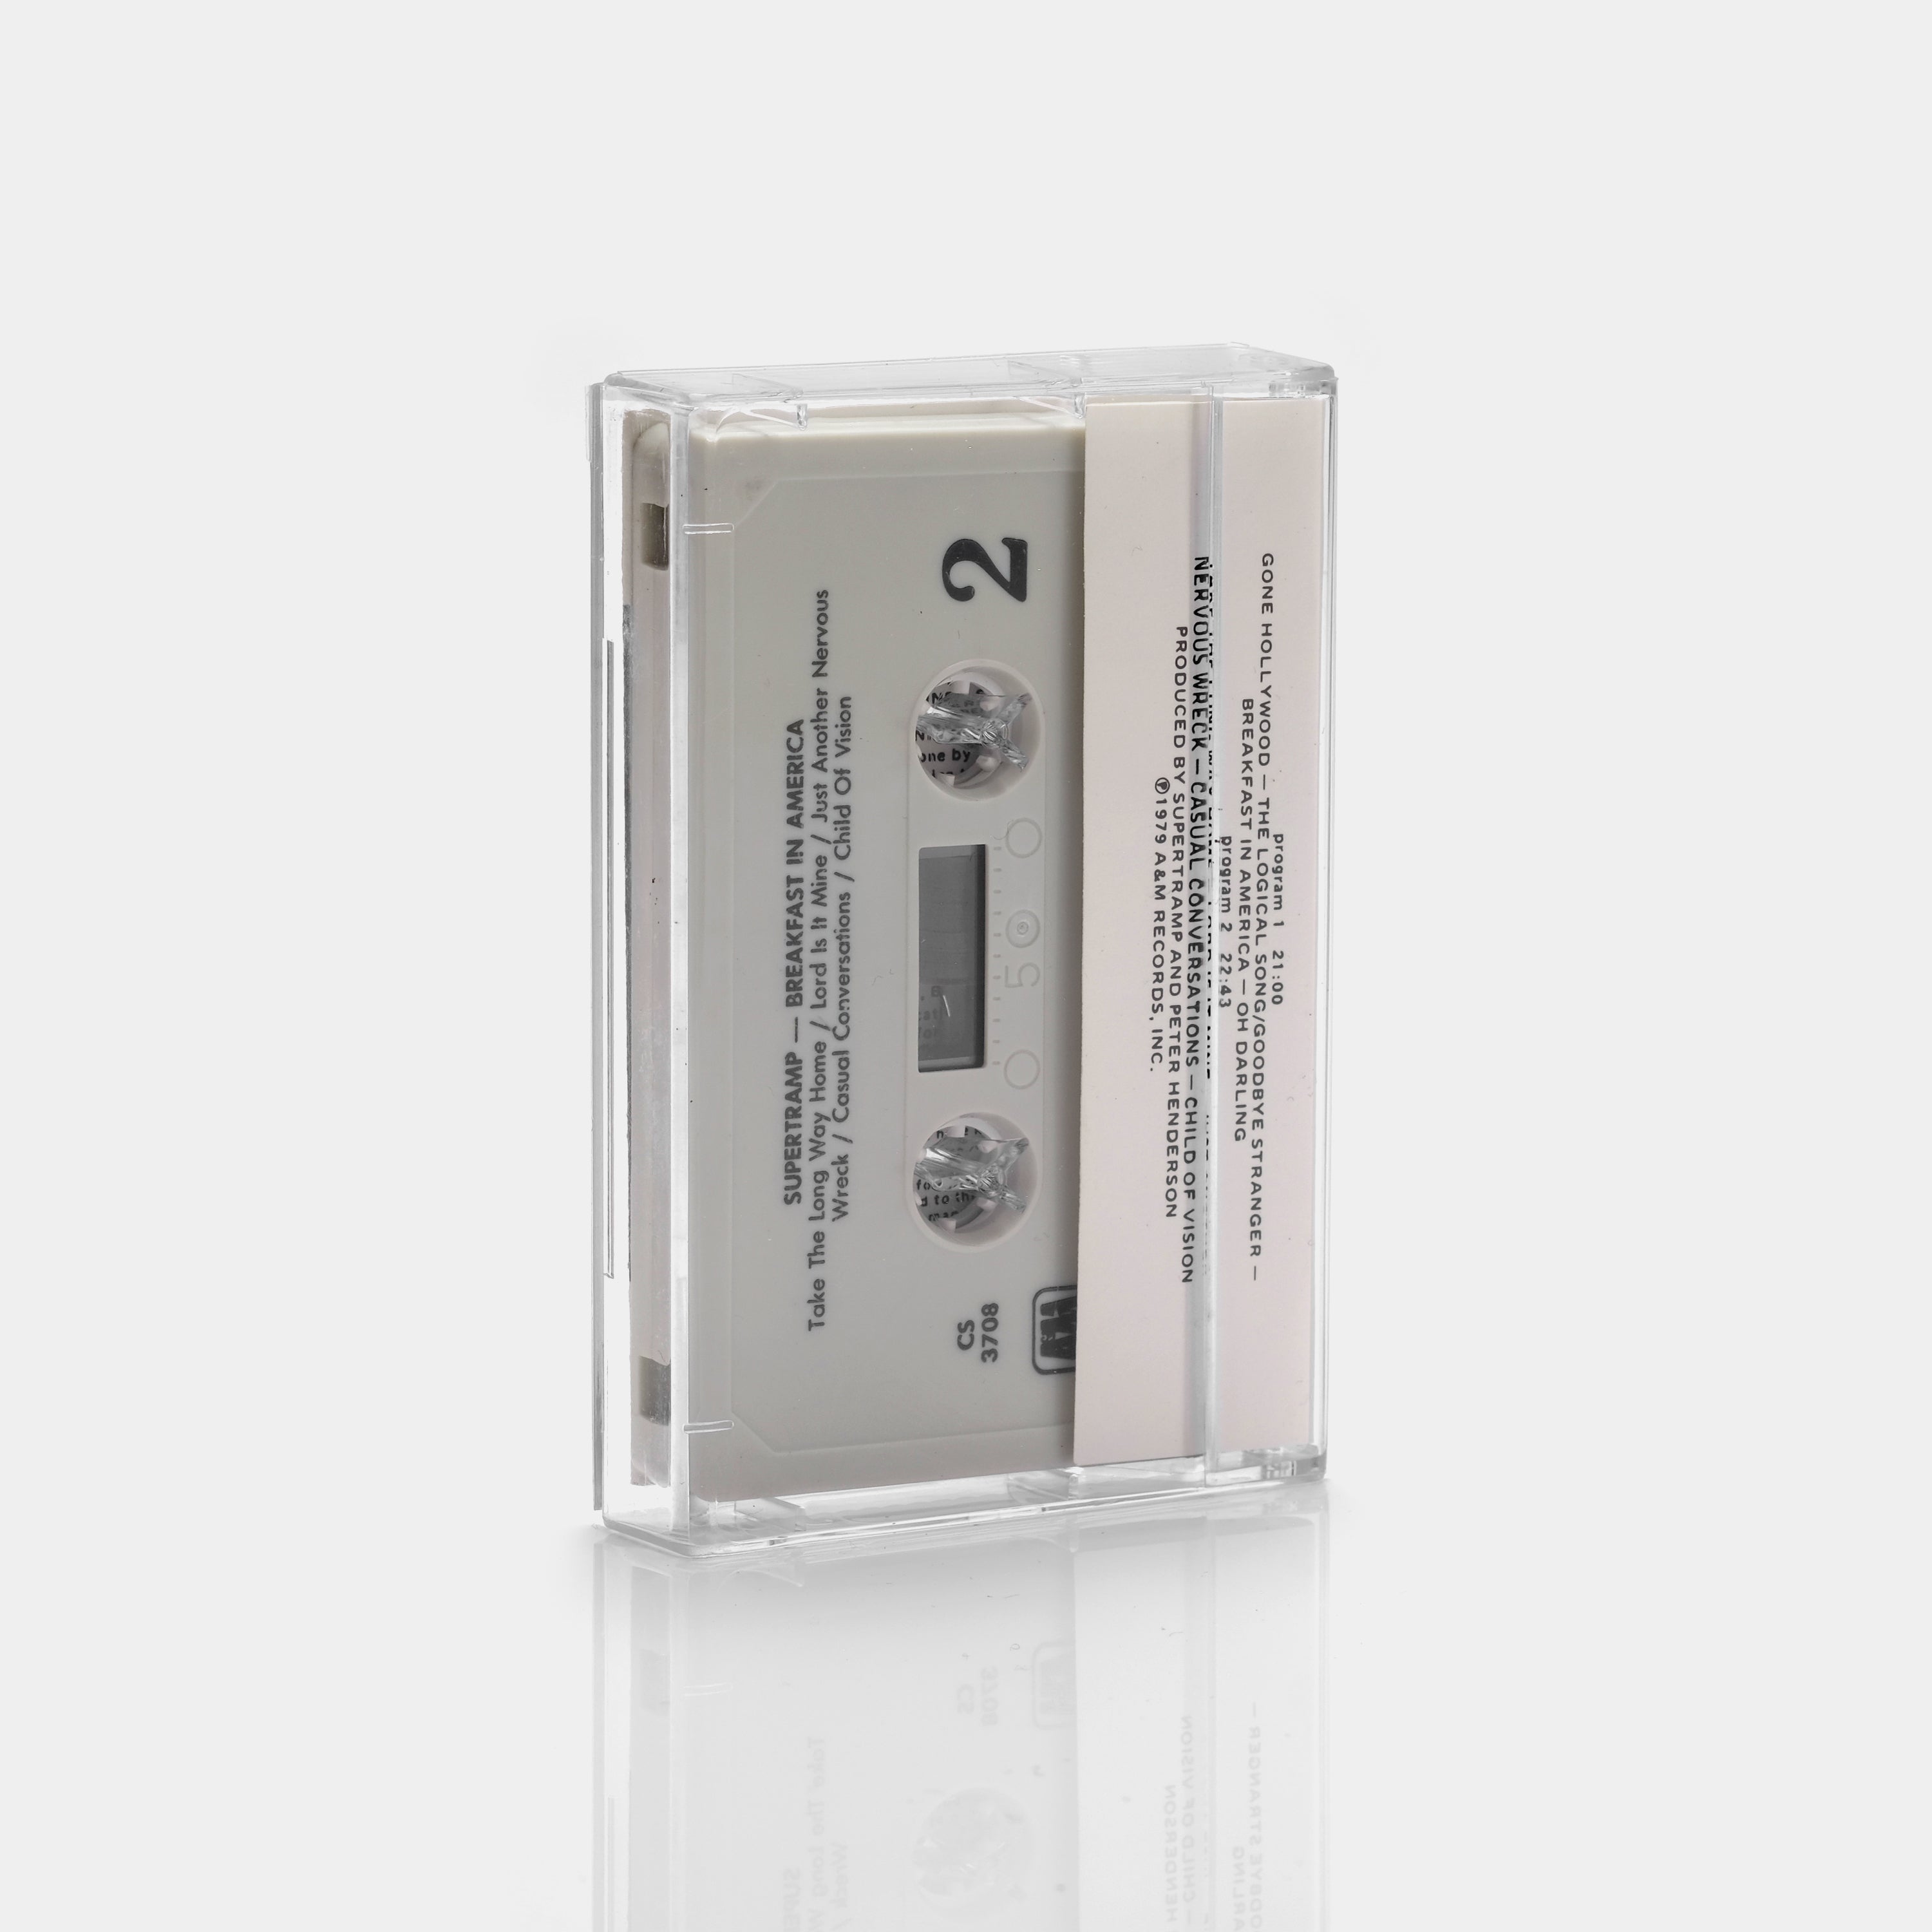 Supertramp - Breakfast In America Cassette Tape